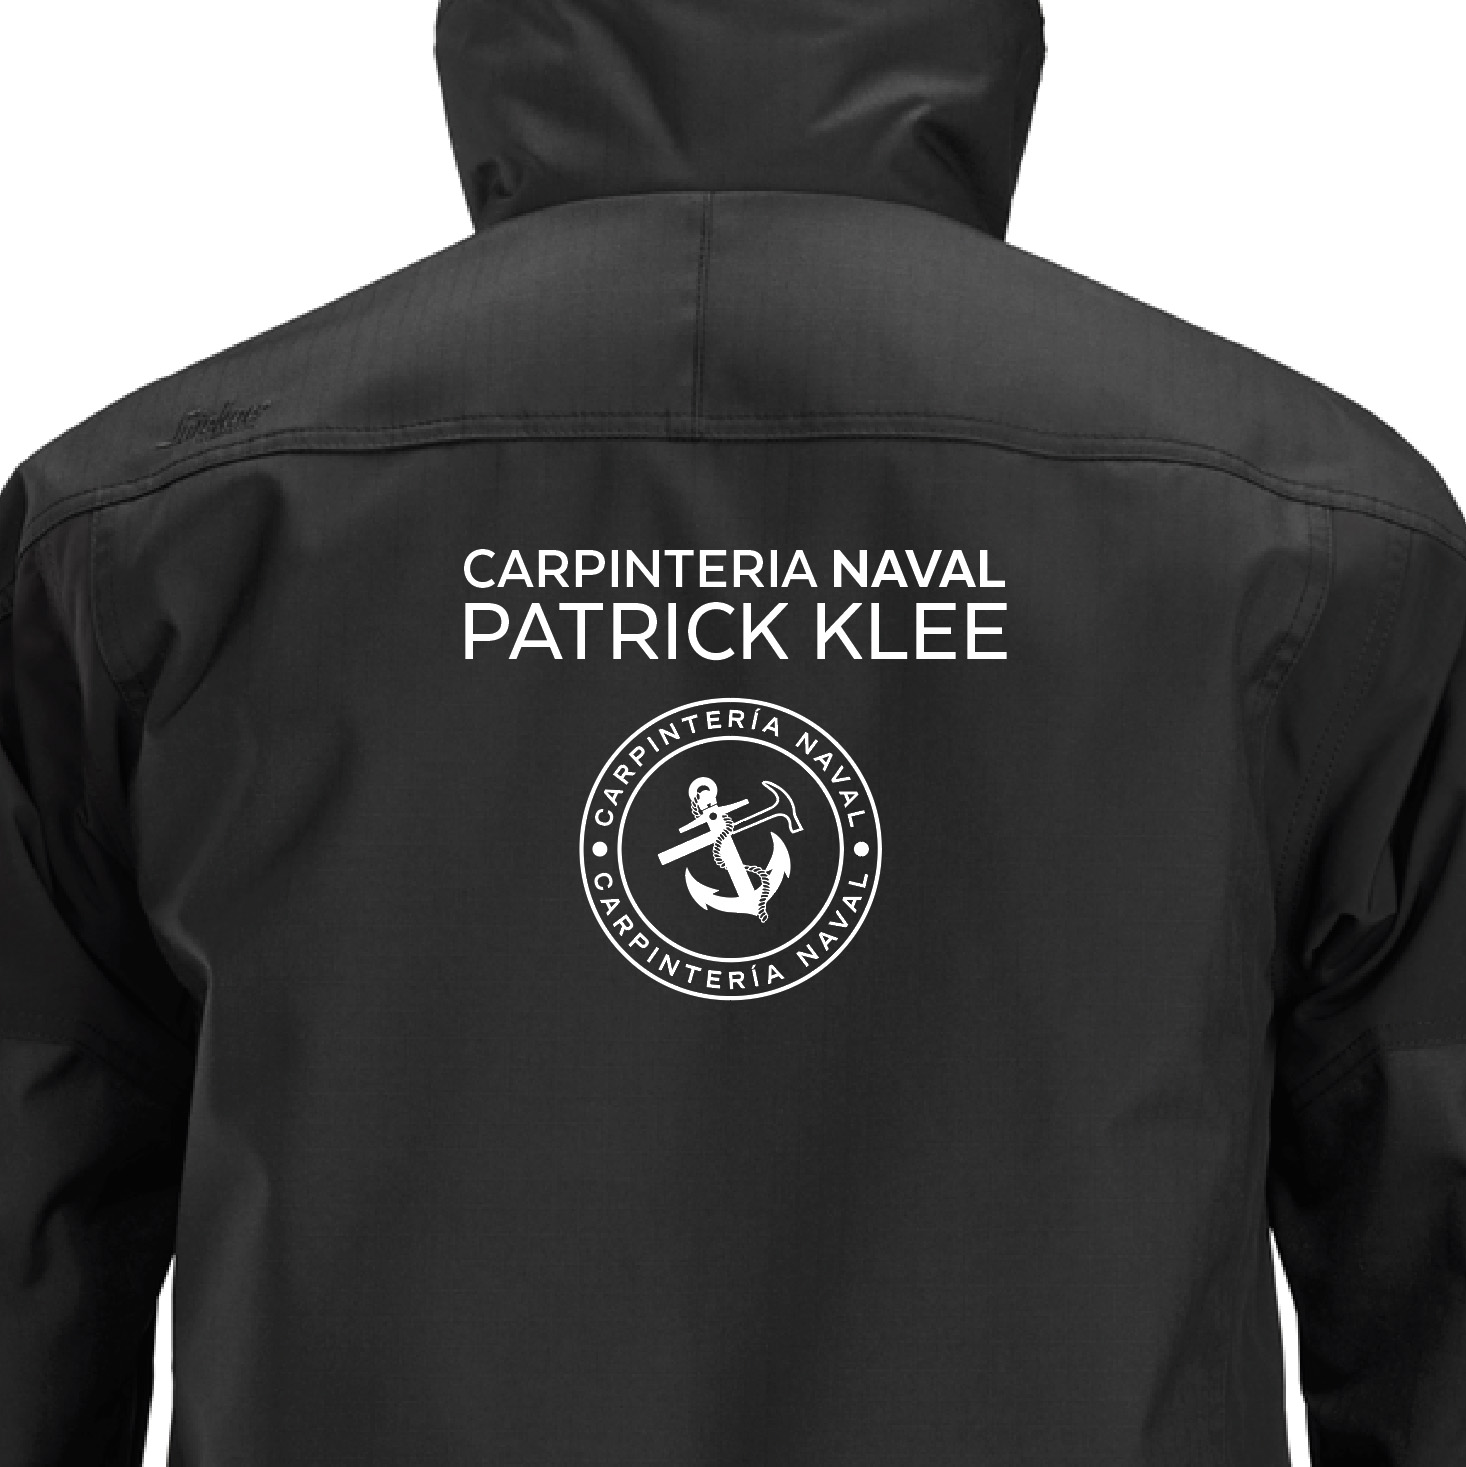 Patrick Klee – Carpintero Naval